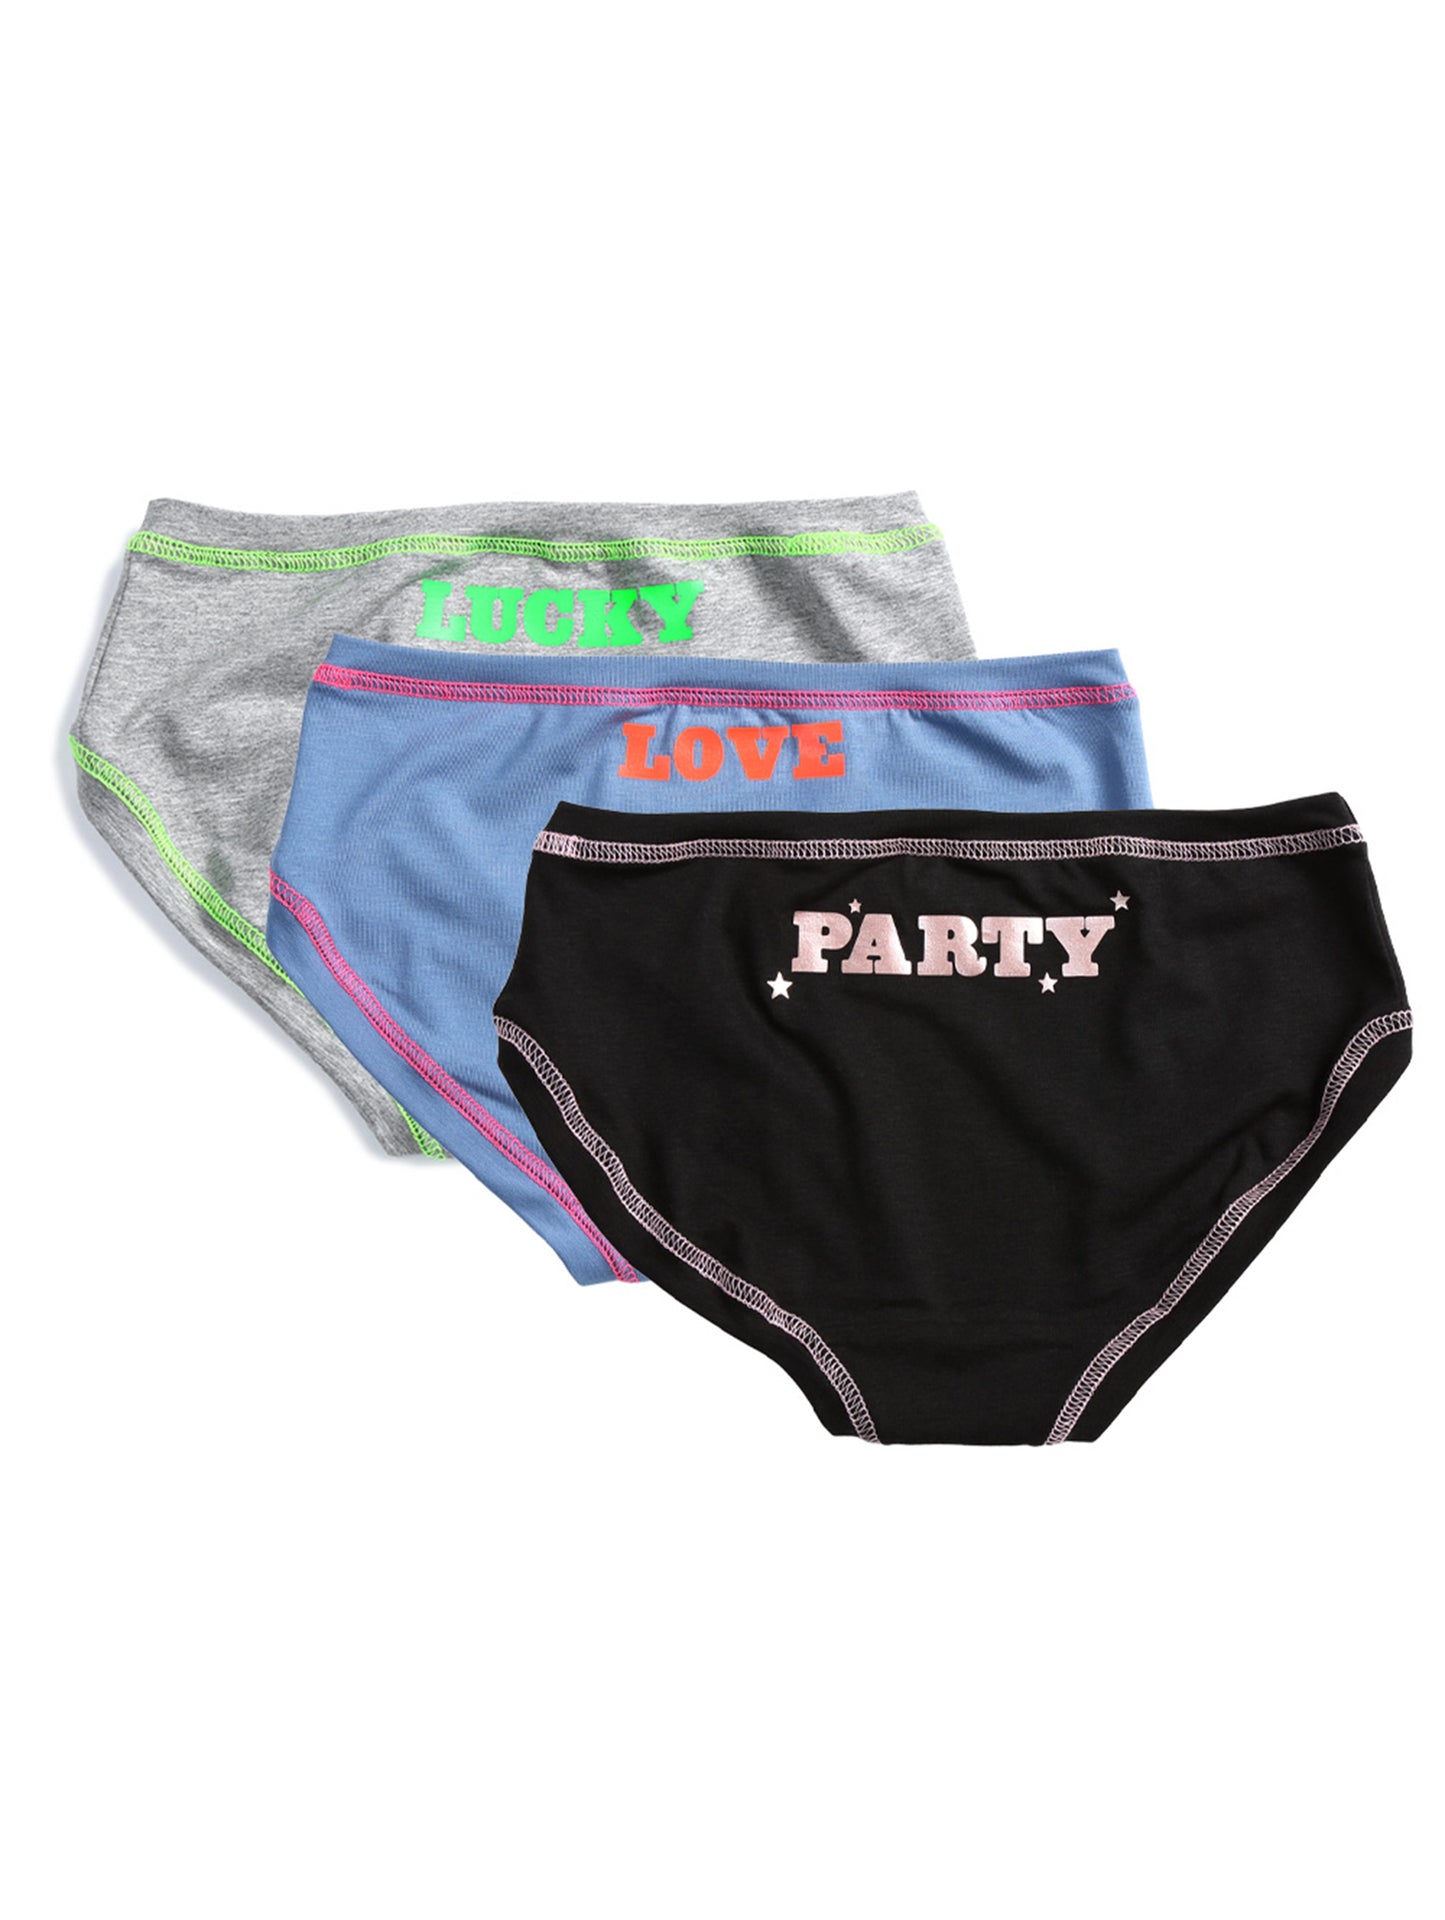 PARTY / LUCKY / LOVE PANTS X3 BOX SET